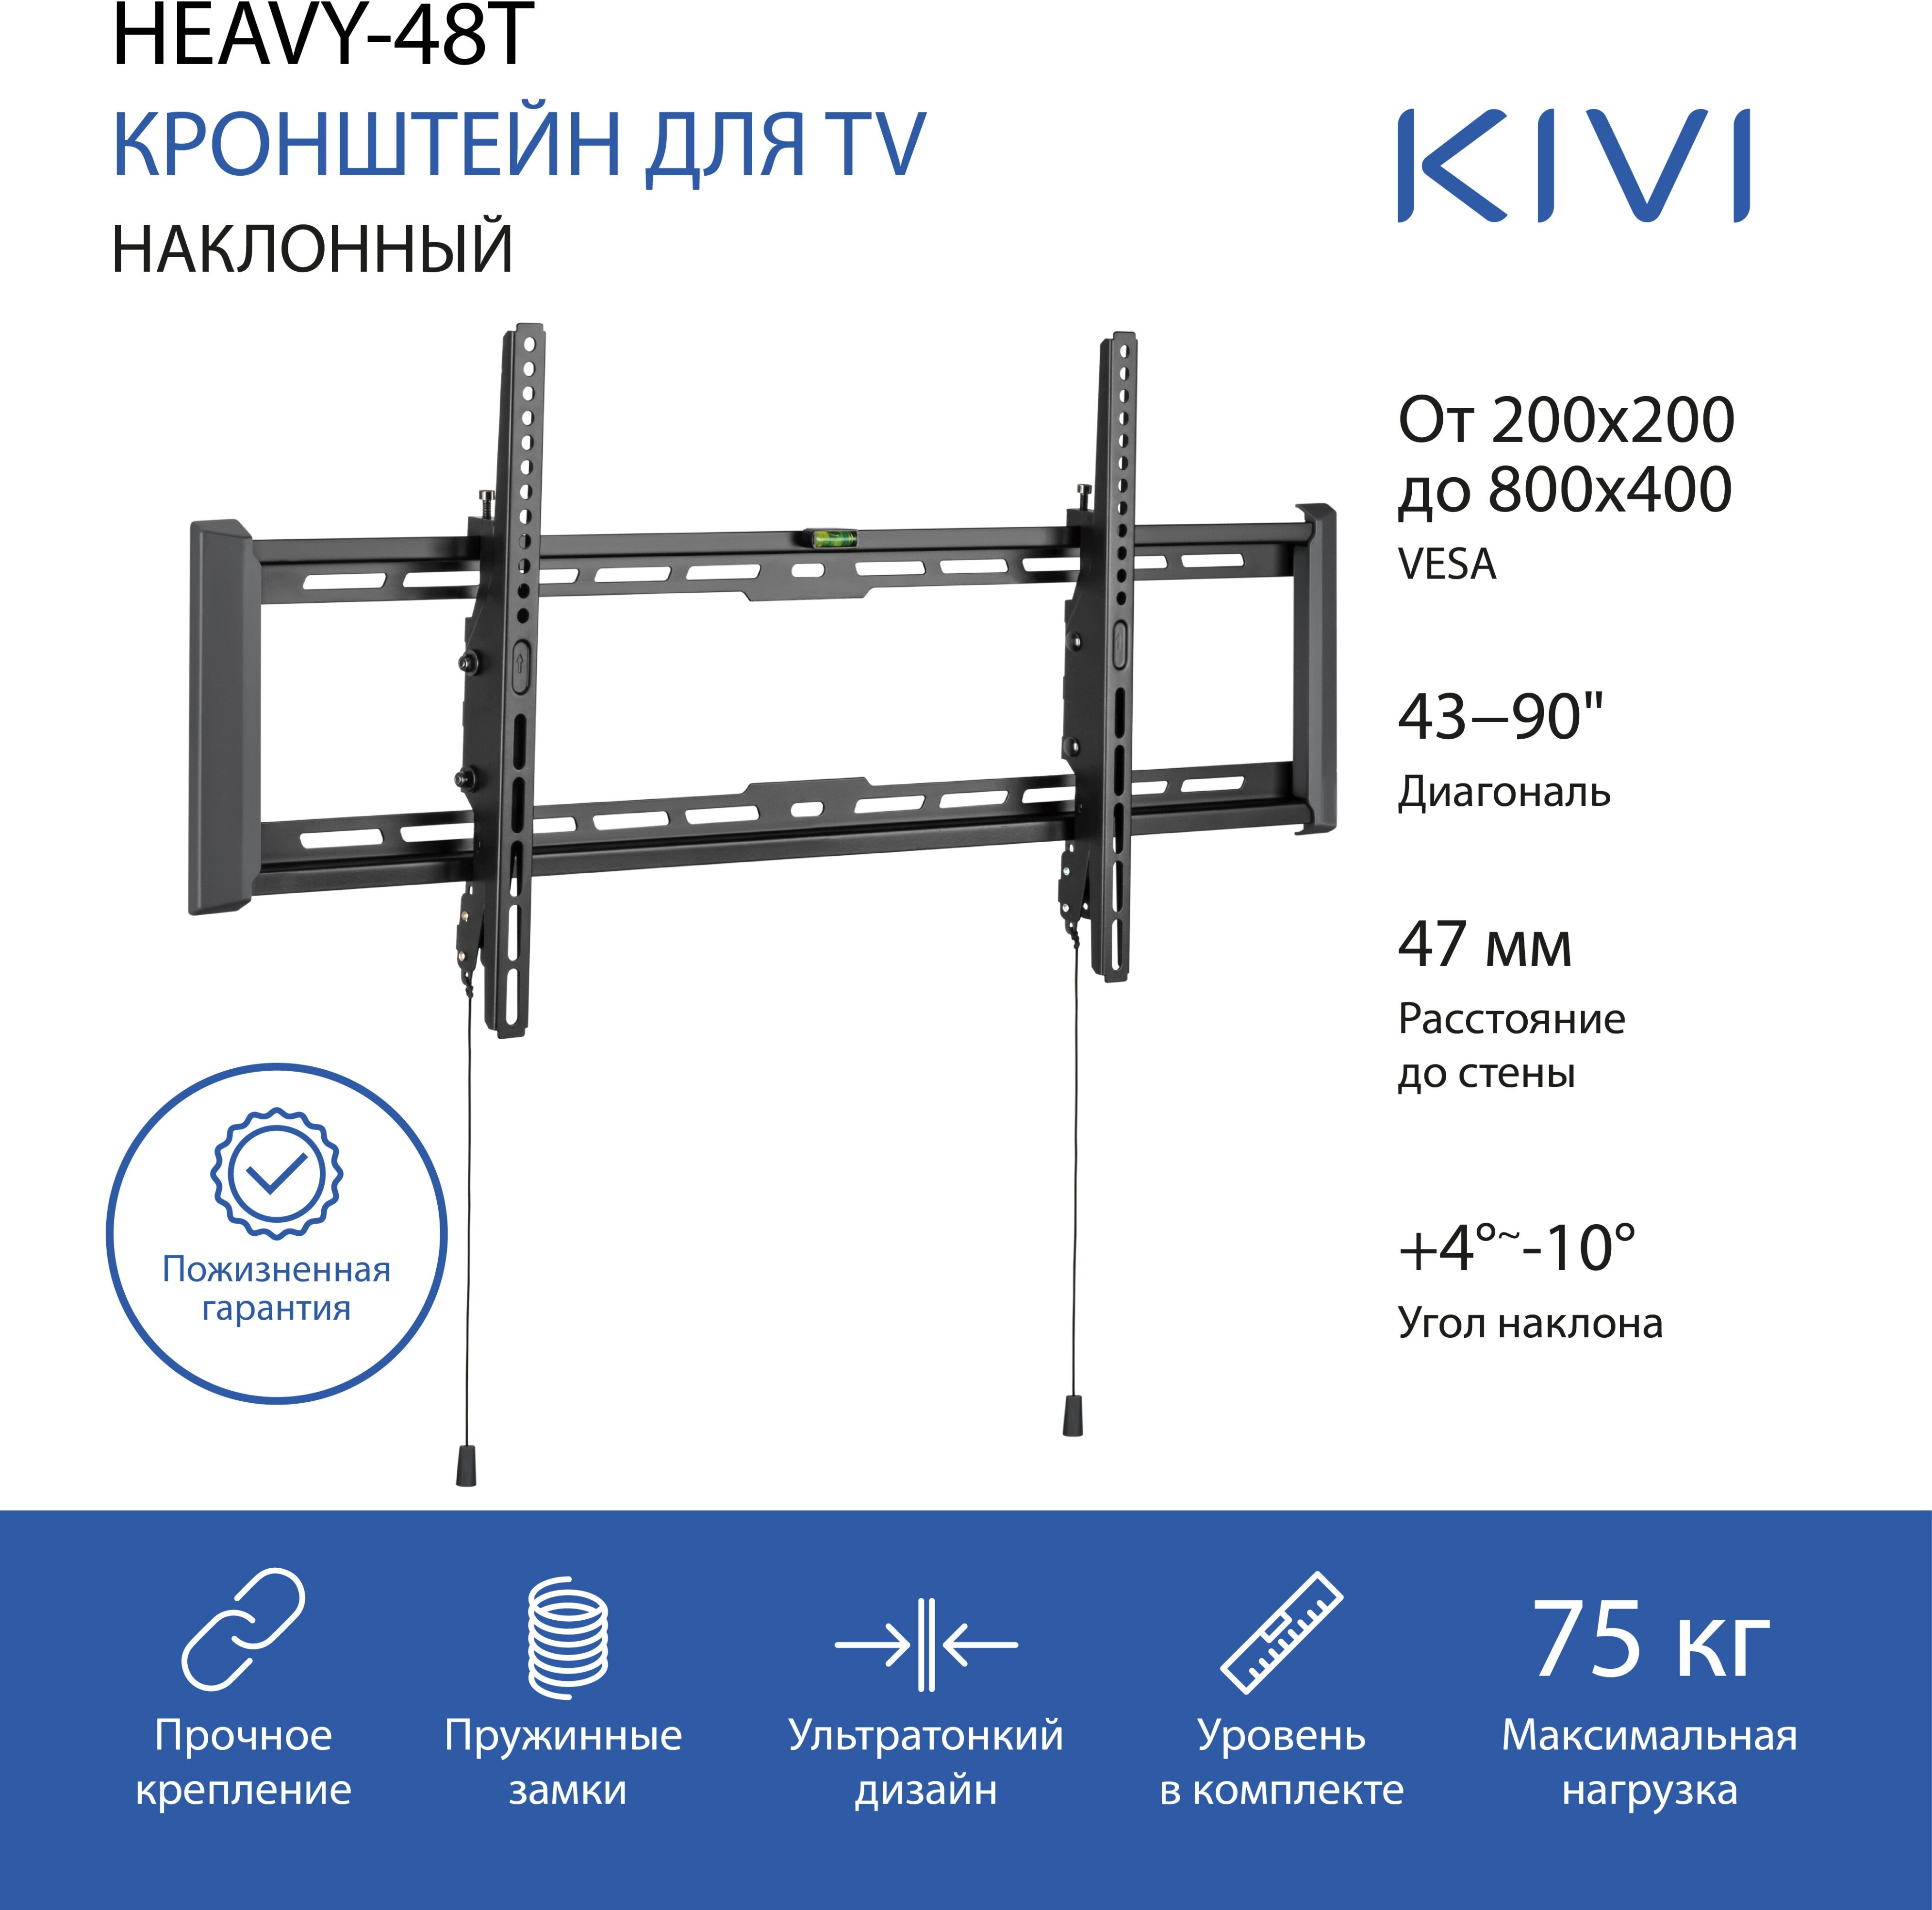 Кронштейн настенный для телевизоров KIVI HEAVY-48T, 43